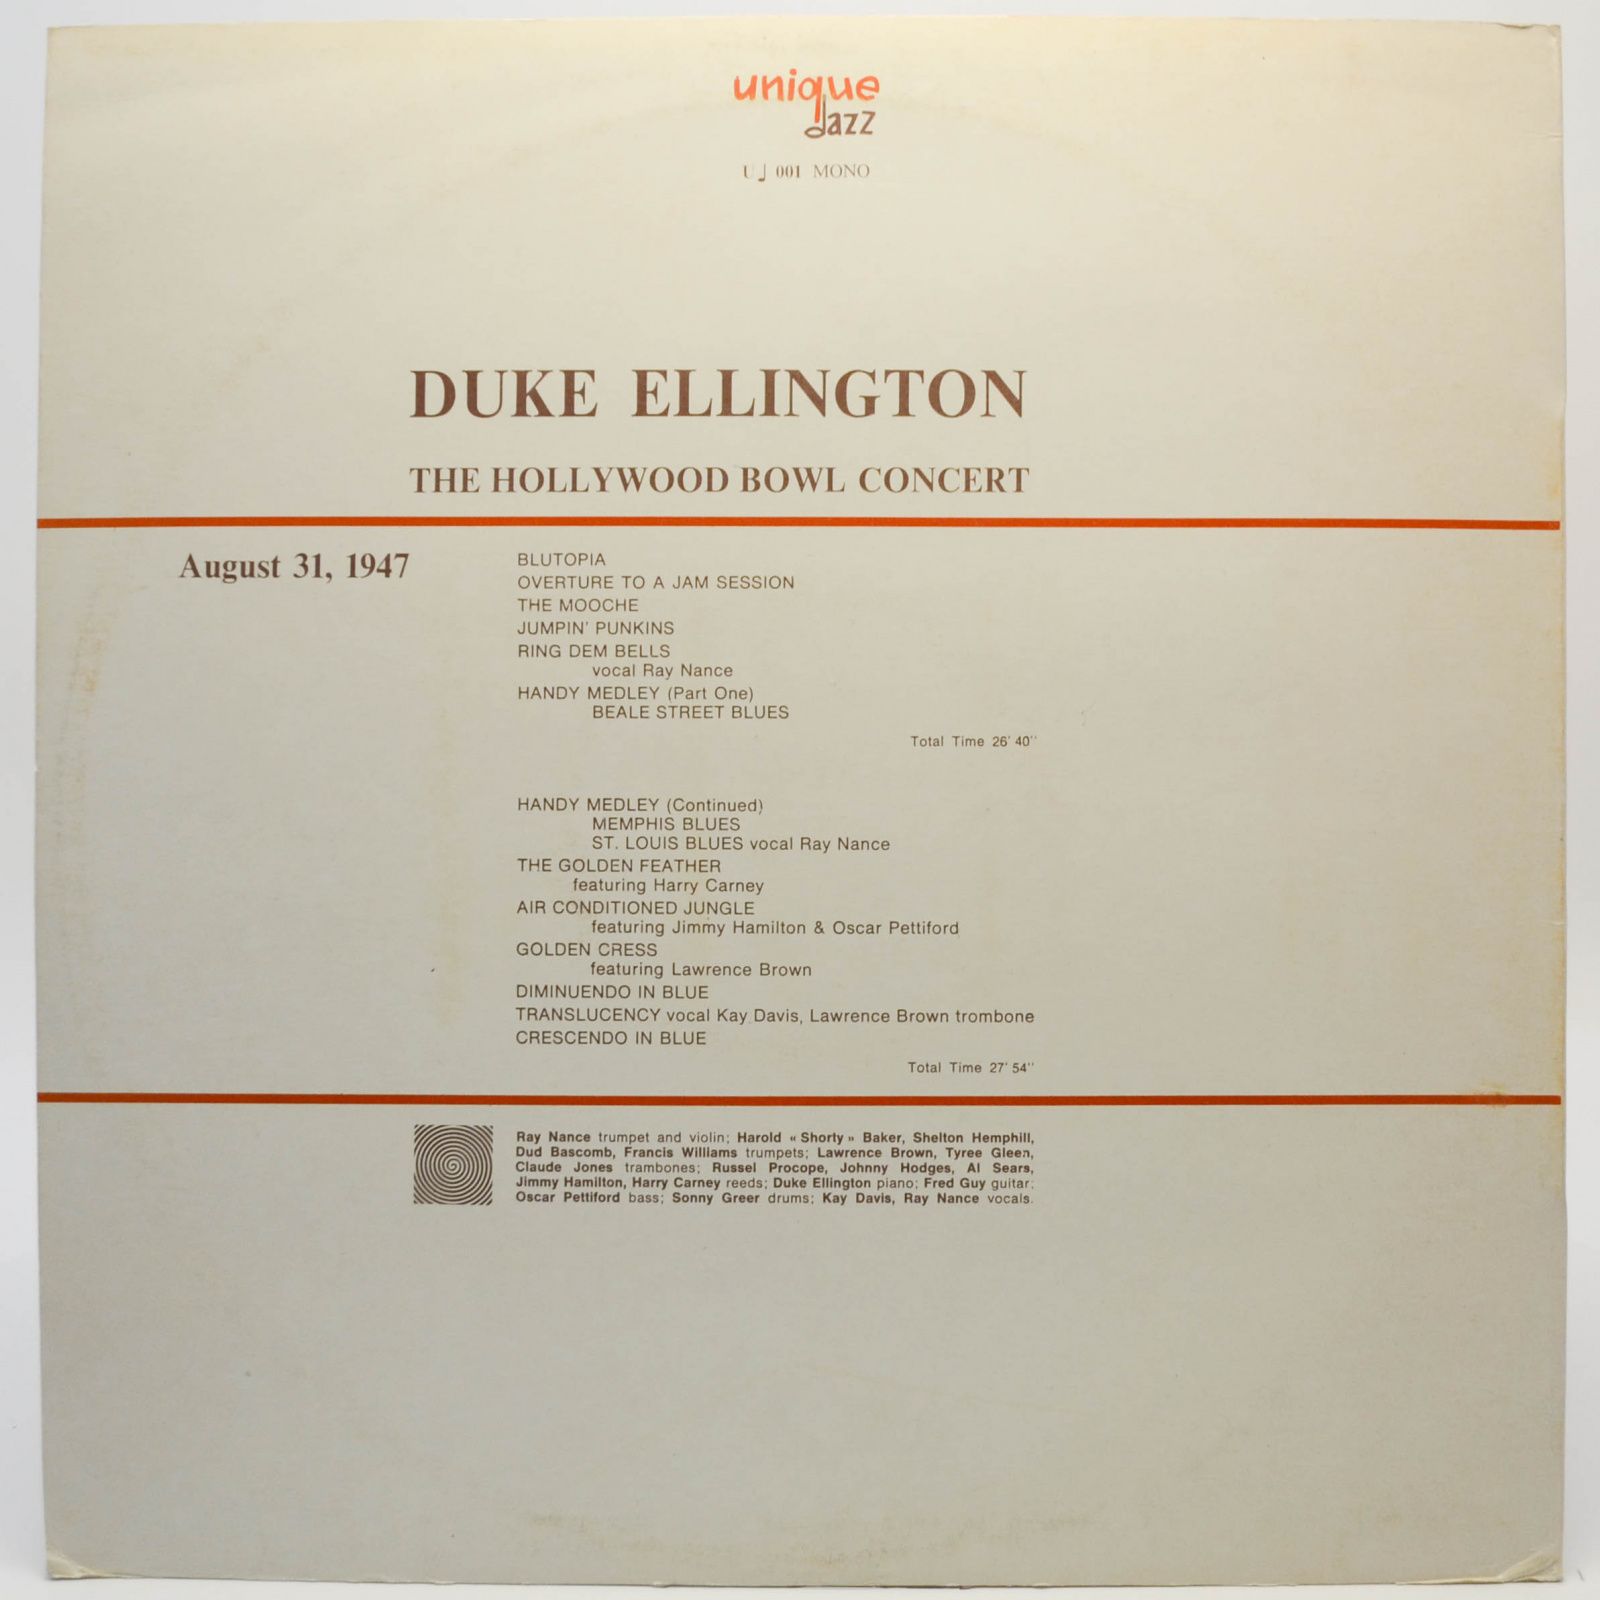 Duke Ellington — The Hollywood Bowl Concert - August 31, 1947 (Volume One), 1977